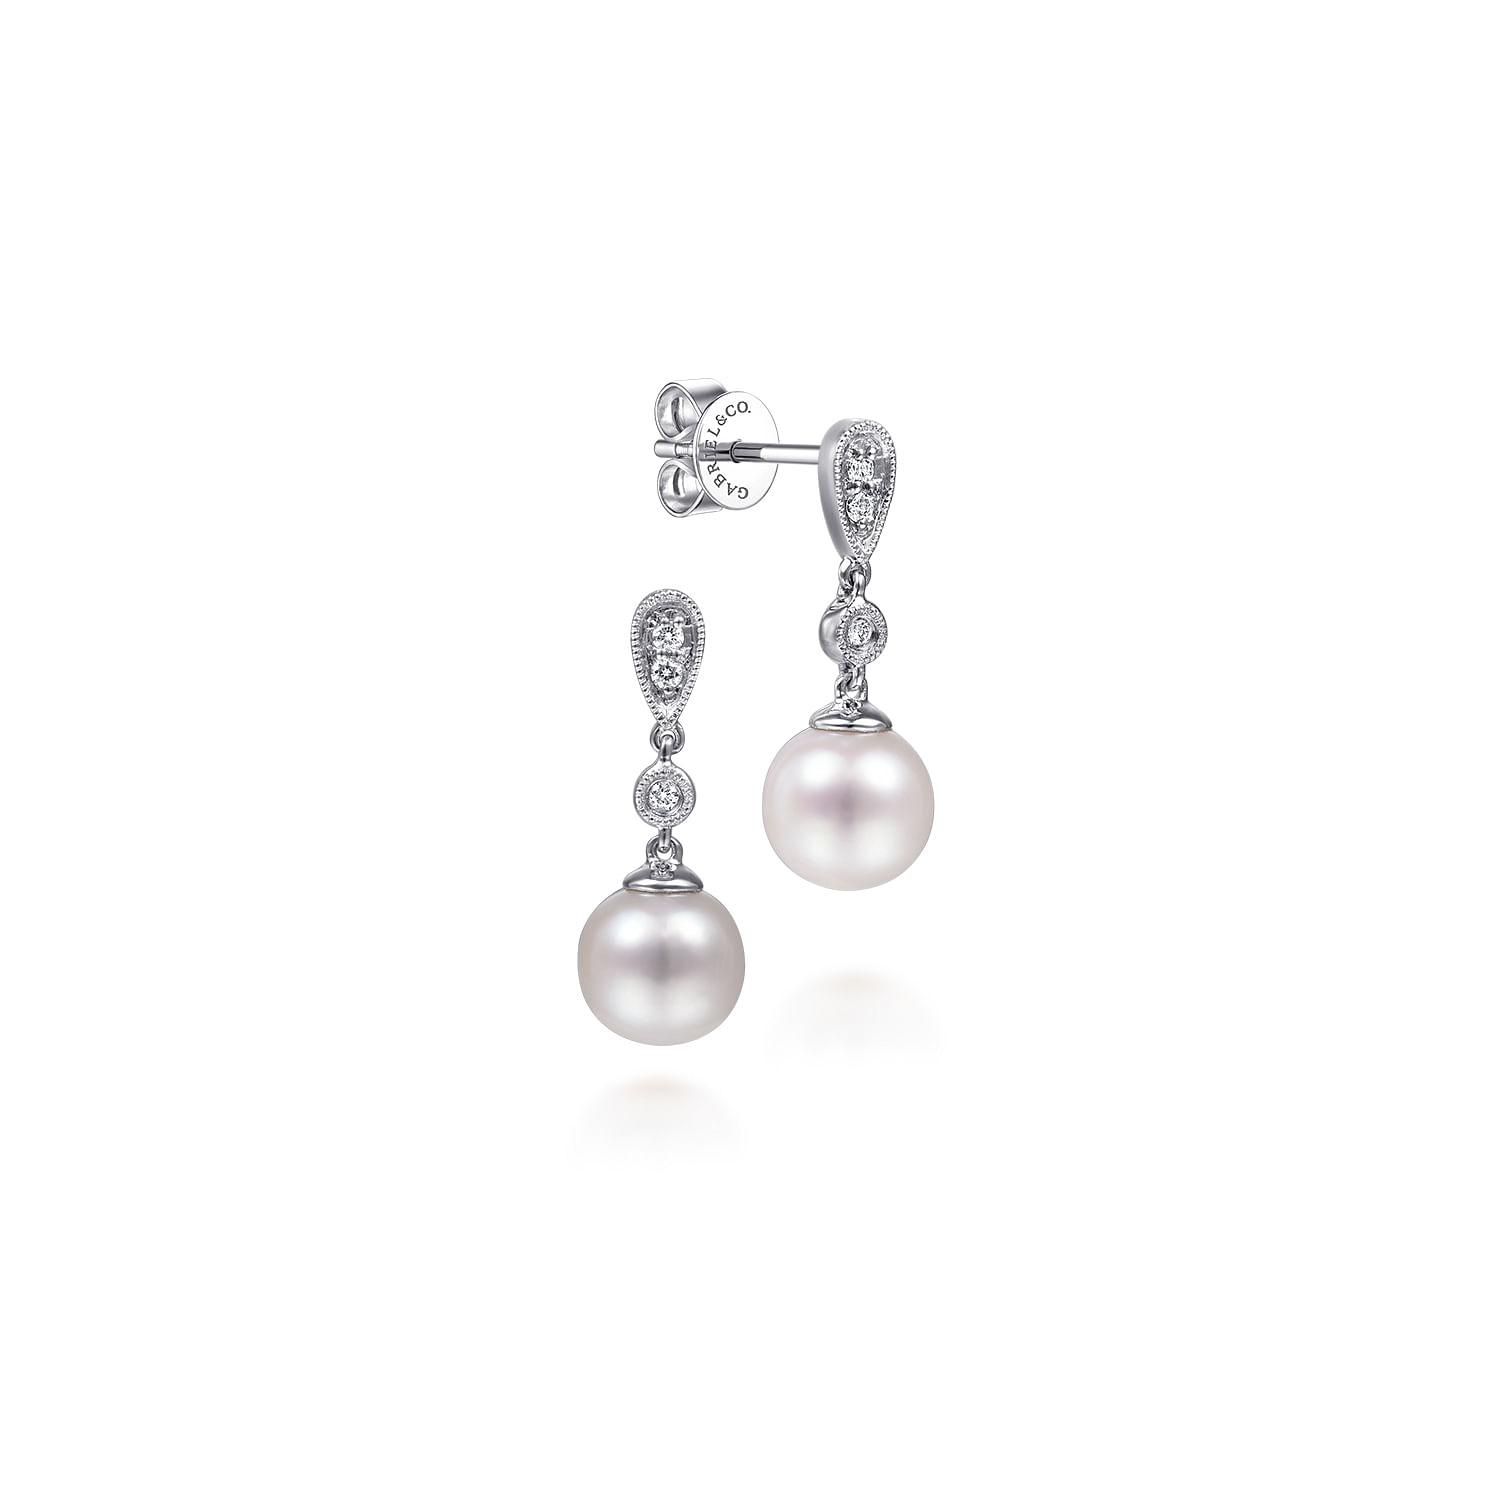 14K White Gold Vintage Inspired Style Diamond Pearl Drop Earrings